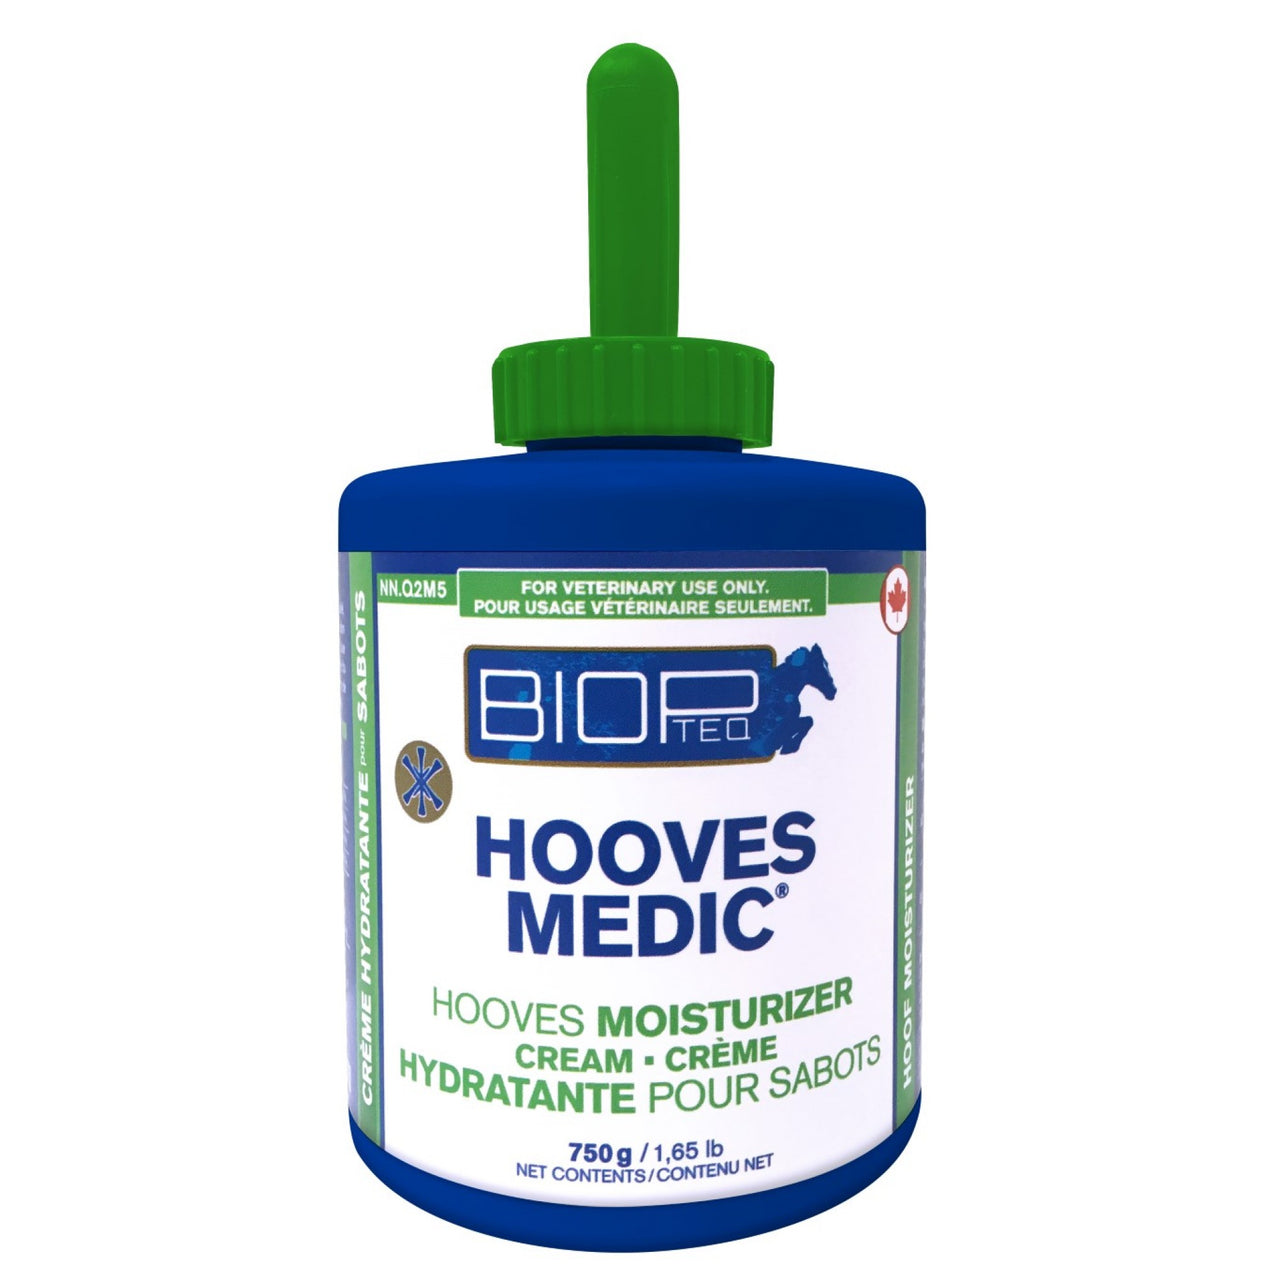 Biopteq Hooves Medic 750g